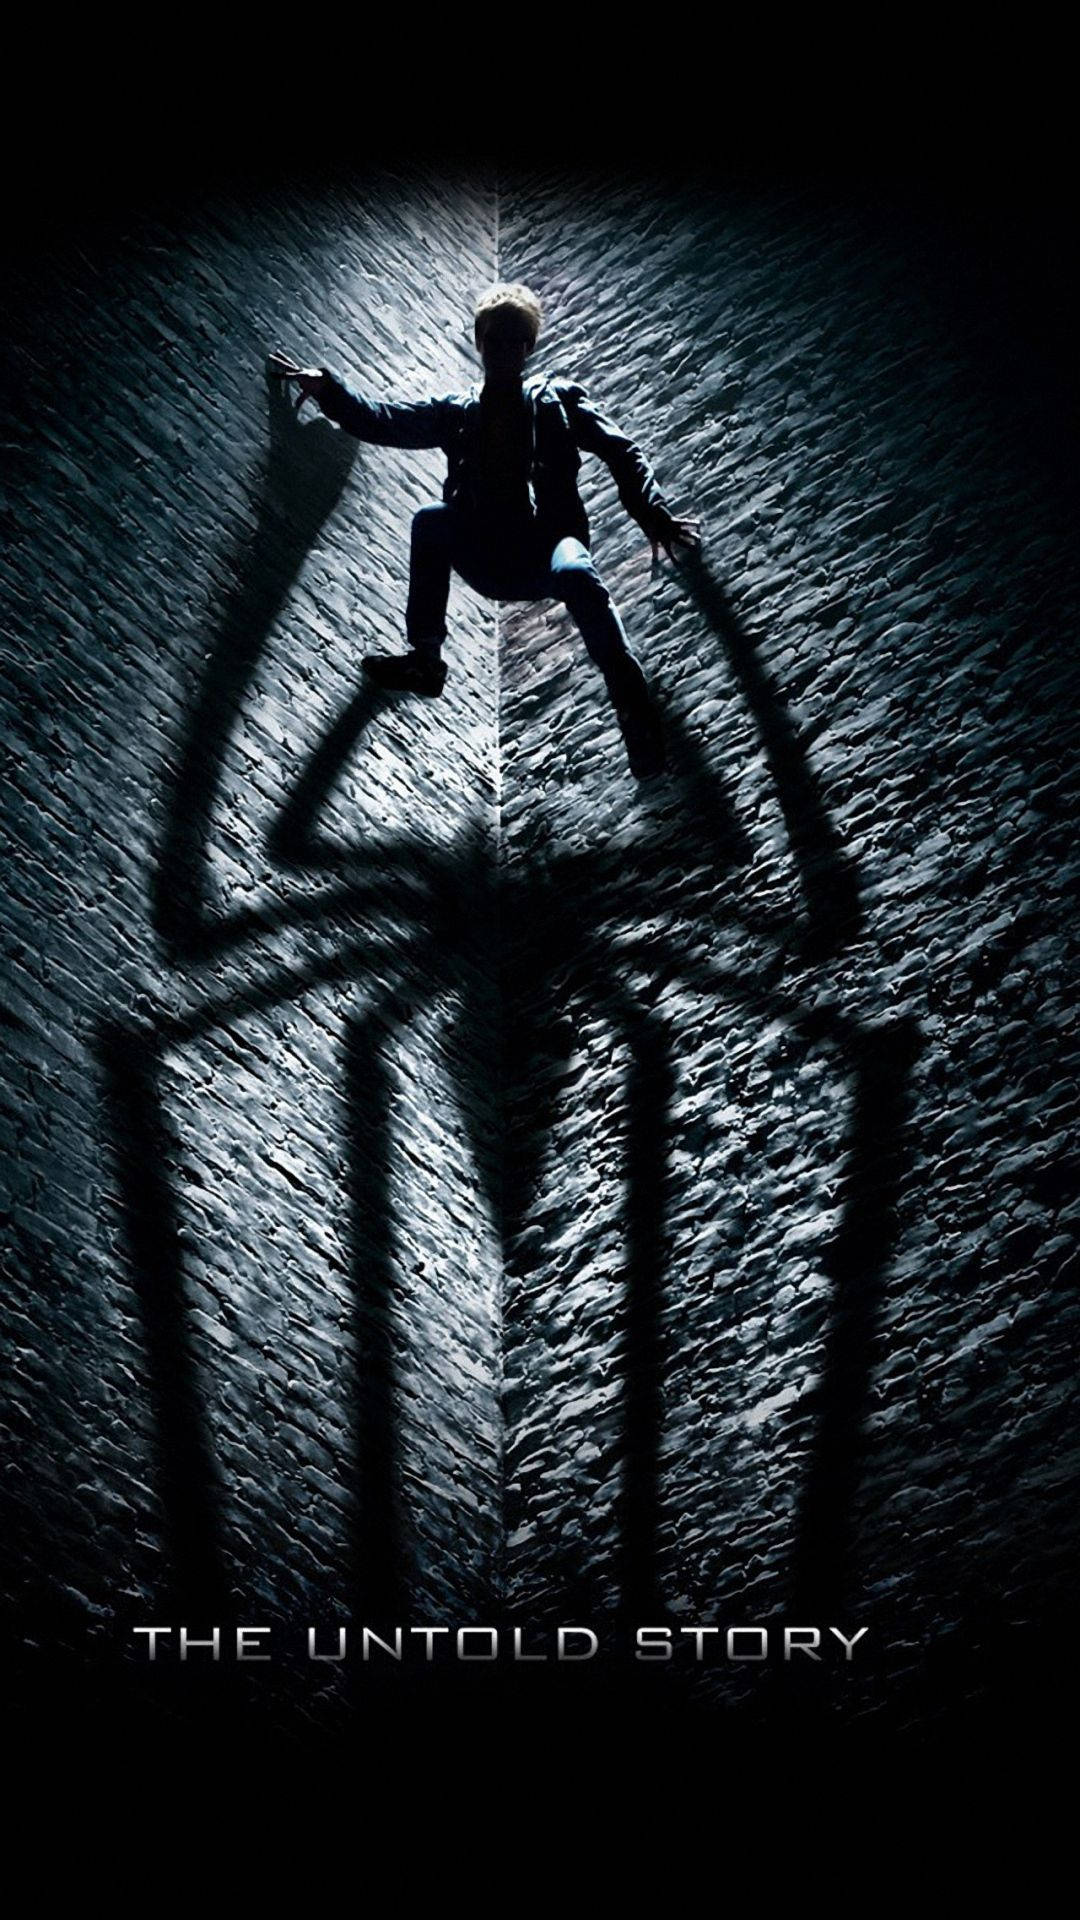 Spiderman Amazing Phone Wallpaper